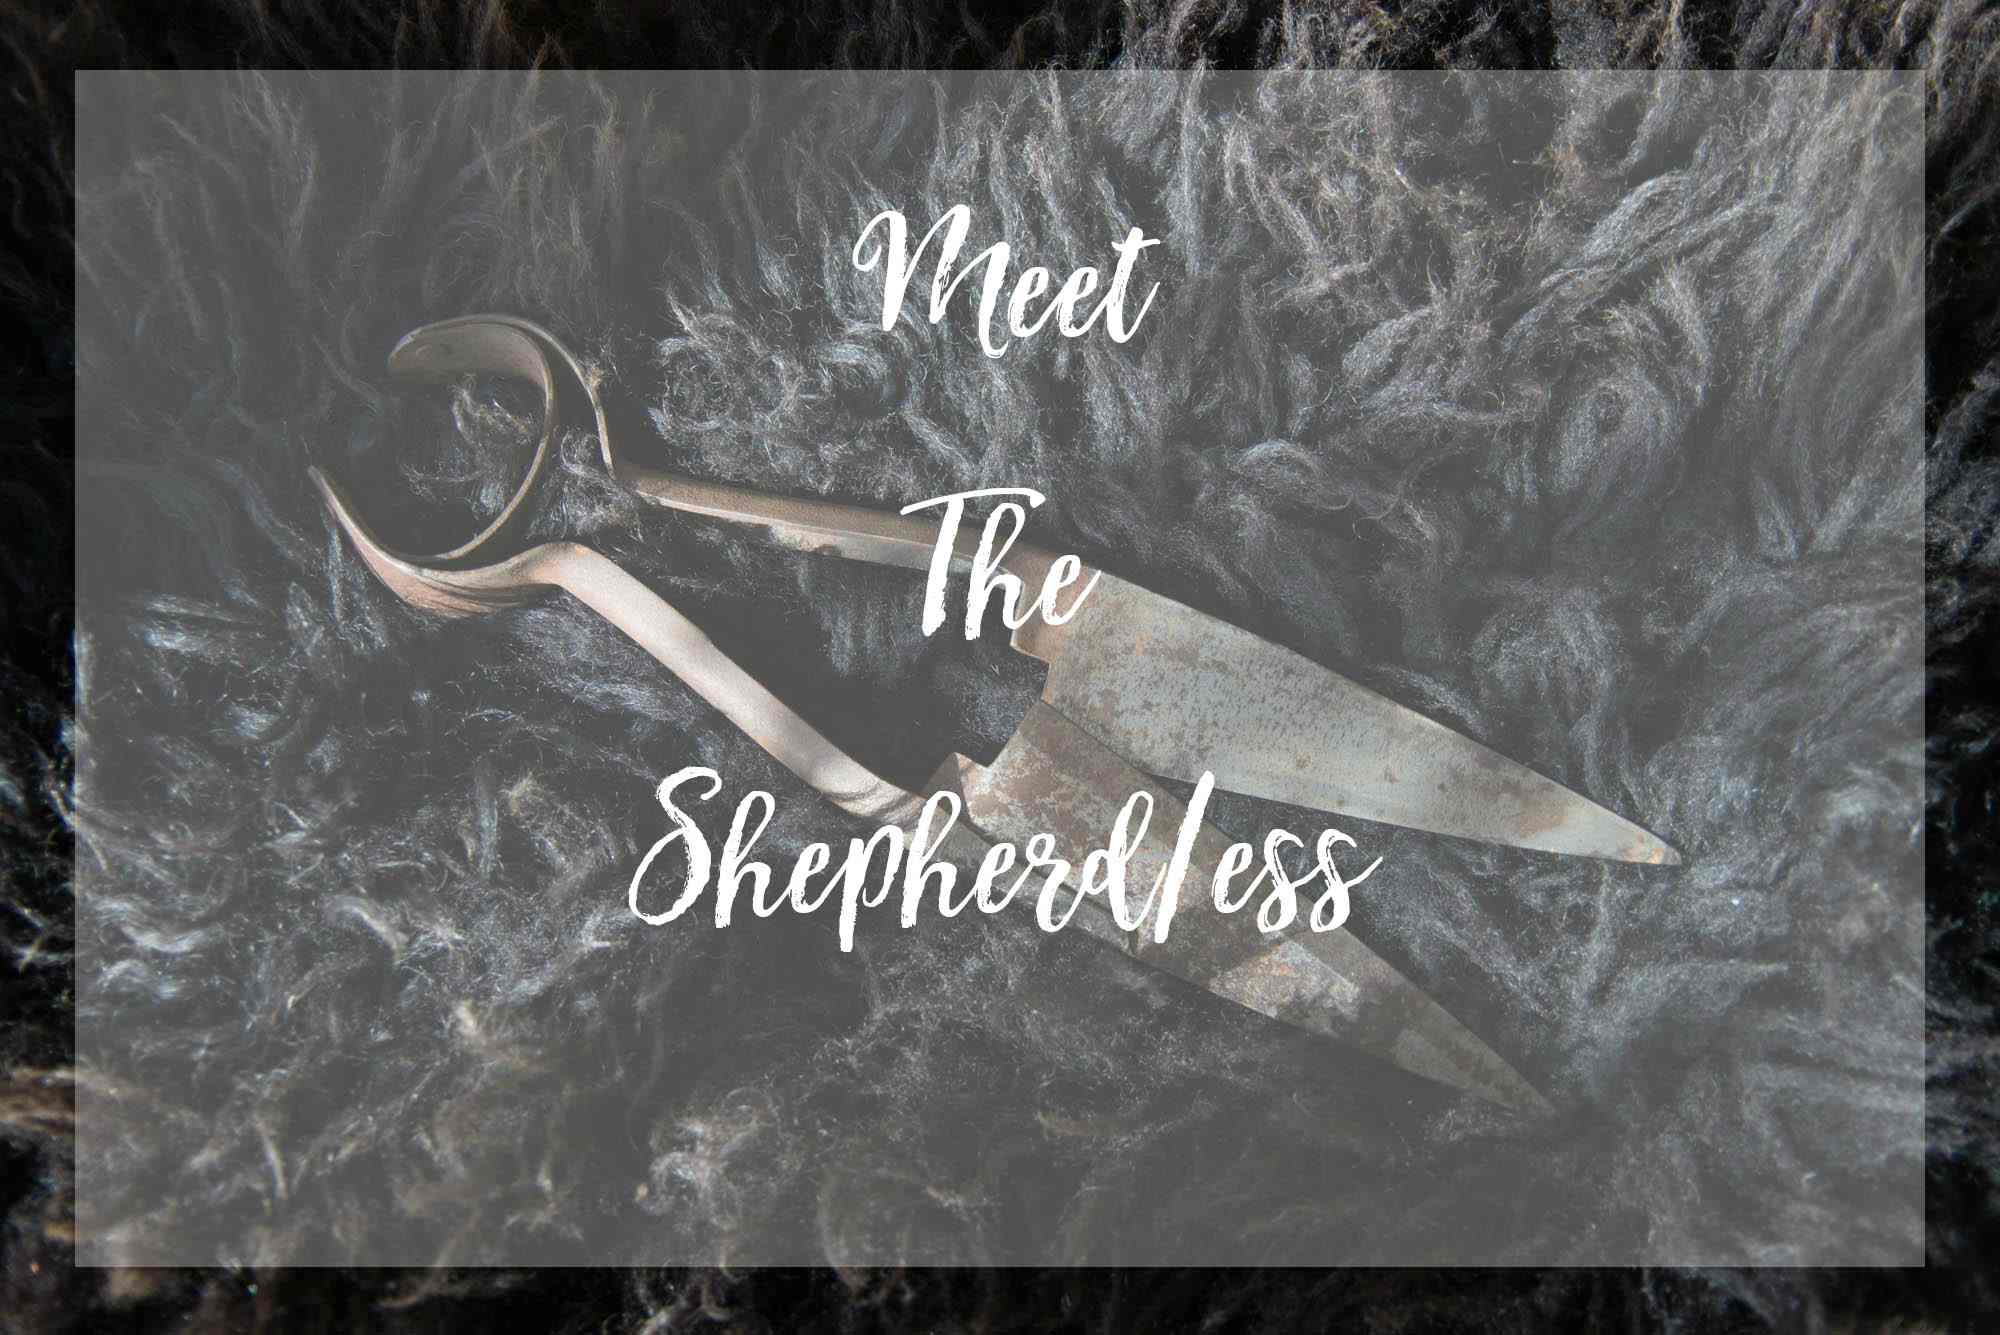 meet the shepherdess